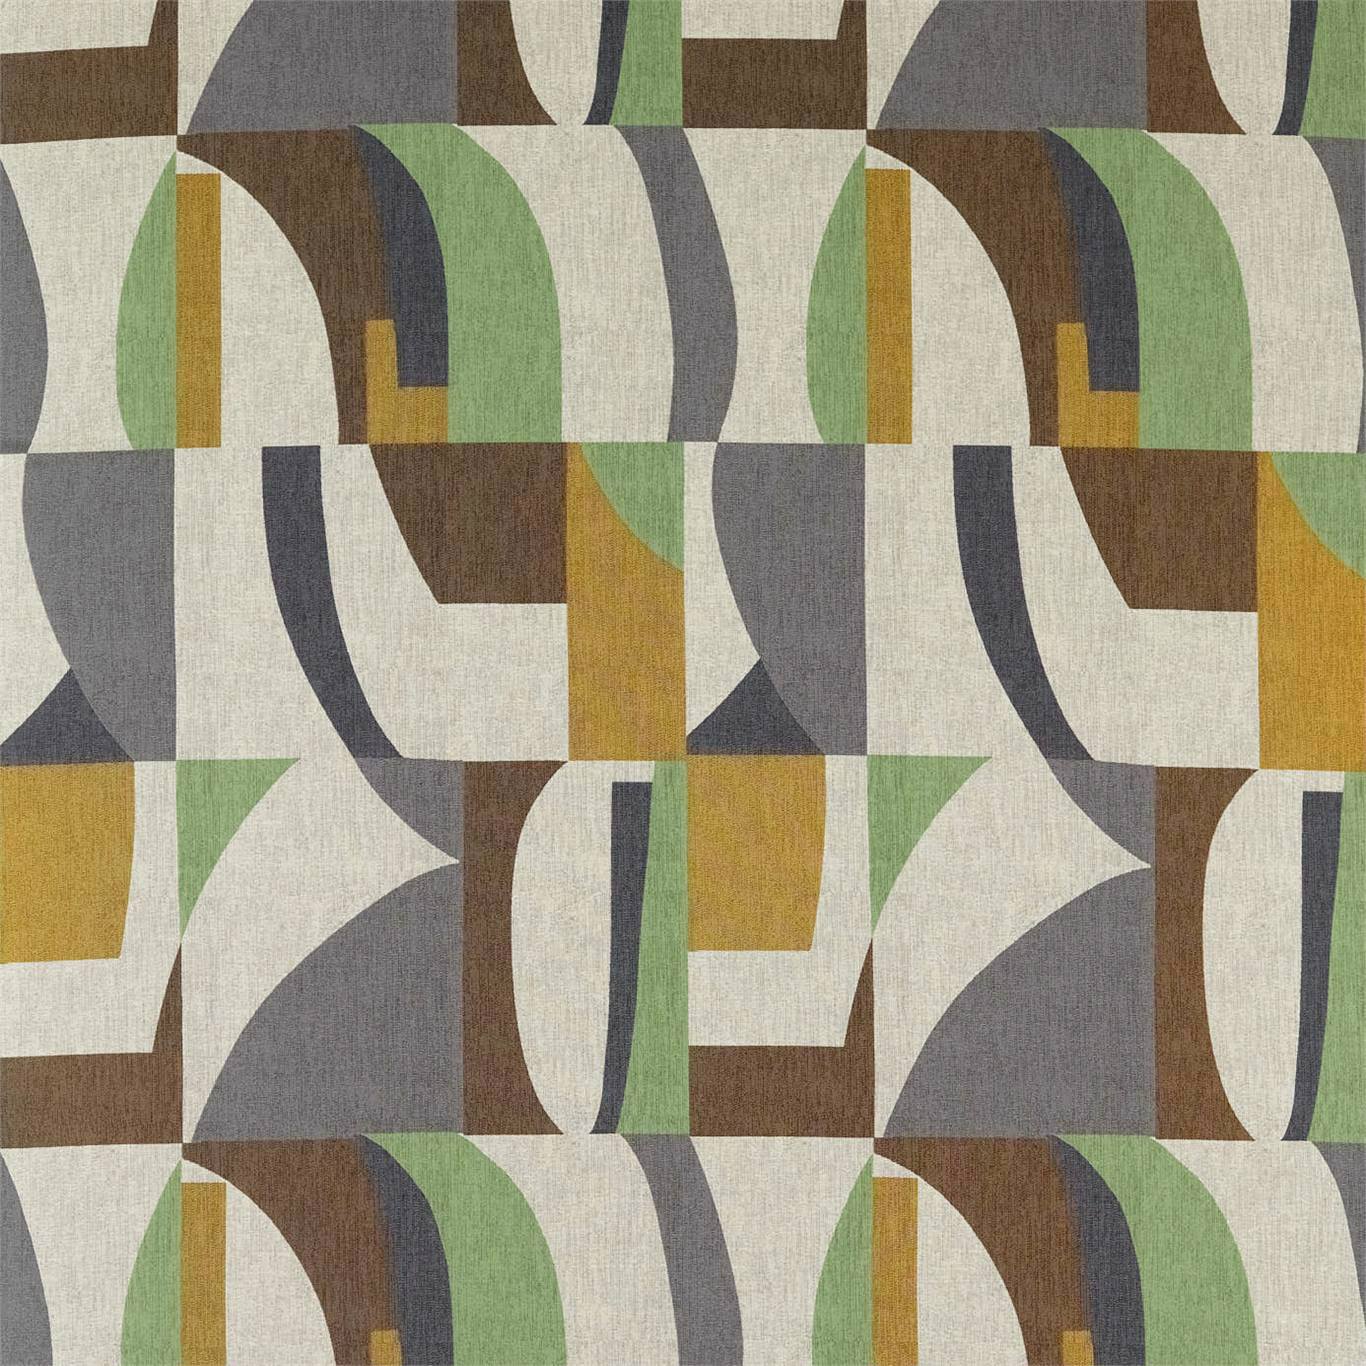 Bodega Fabric by Harlequin - HATL132870 - Saffron / Charcoal / Wasabi